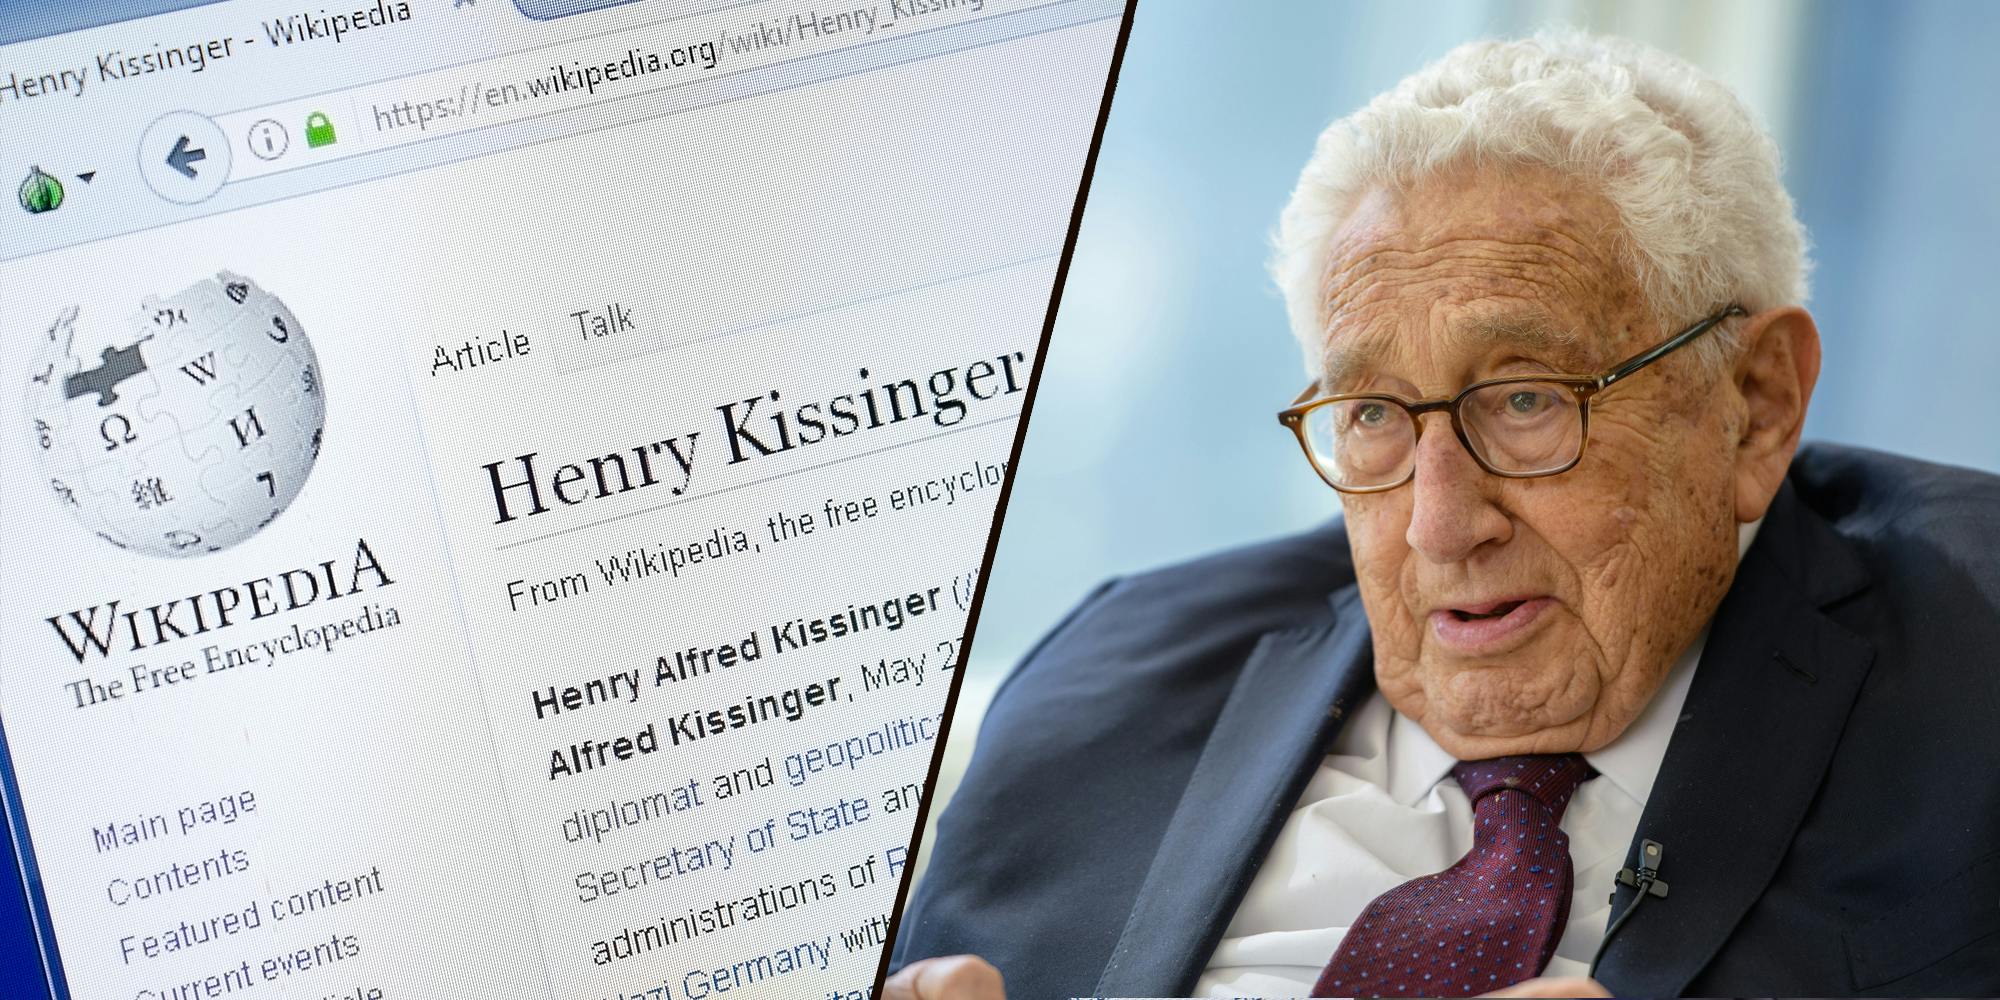 Henry Kissinger Wikipedia article on computer screen (l) Henry Kissinger in front of light blue background (r)